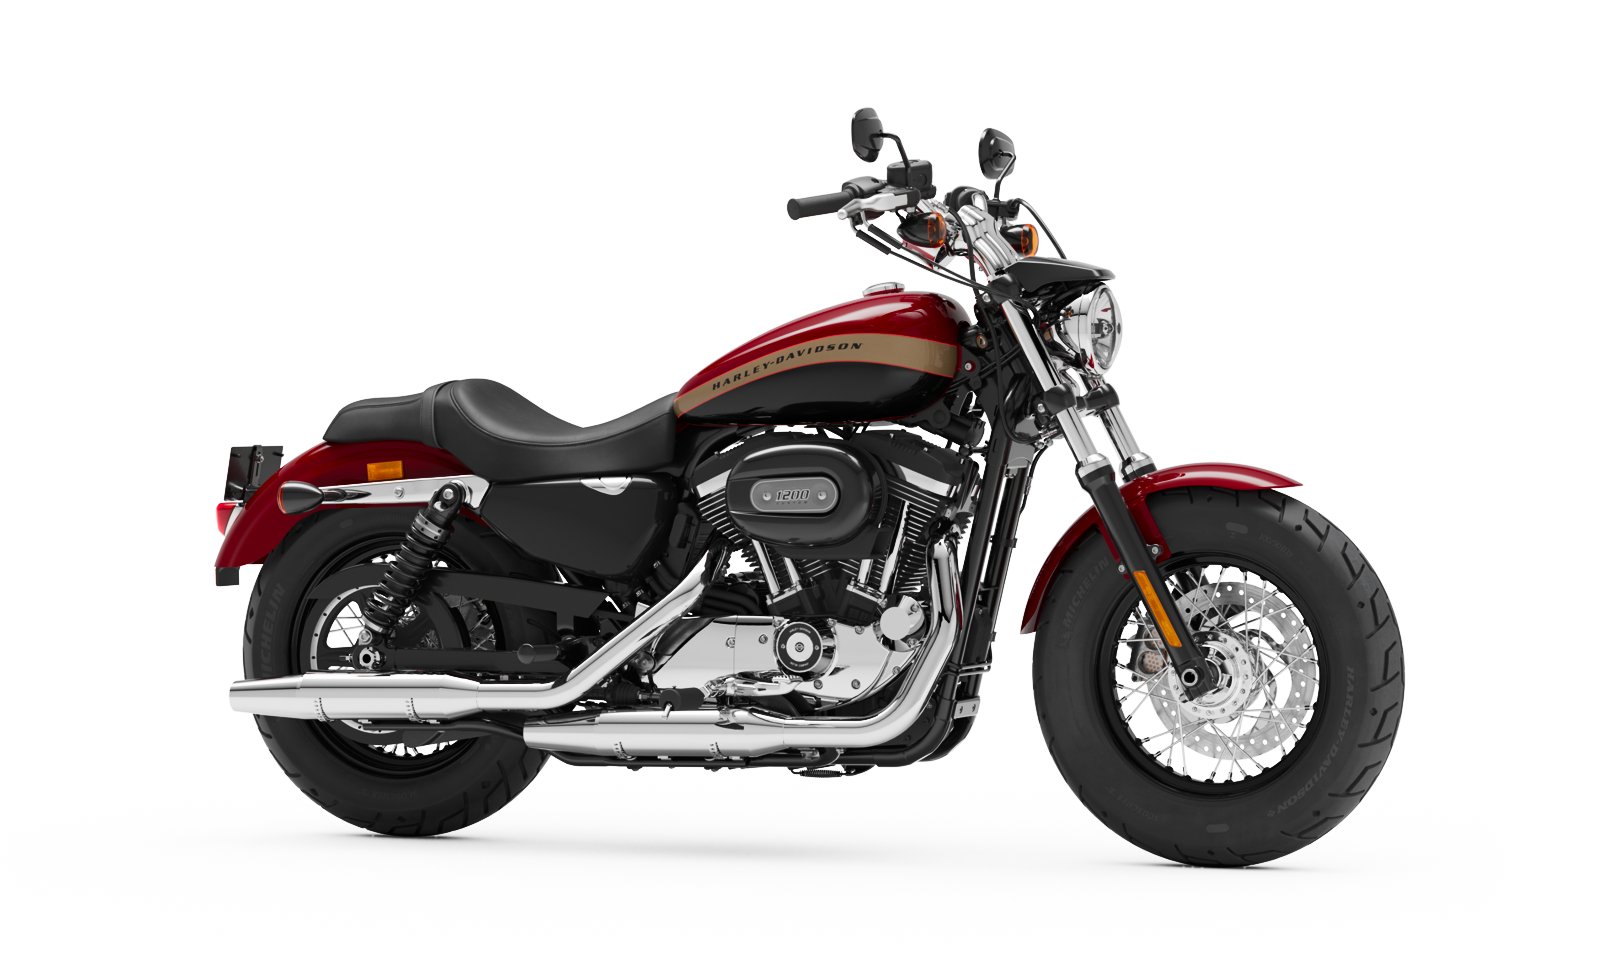 2020 Harley Davidson 1200 Custom Motorcycle Harley Davidson India